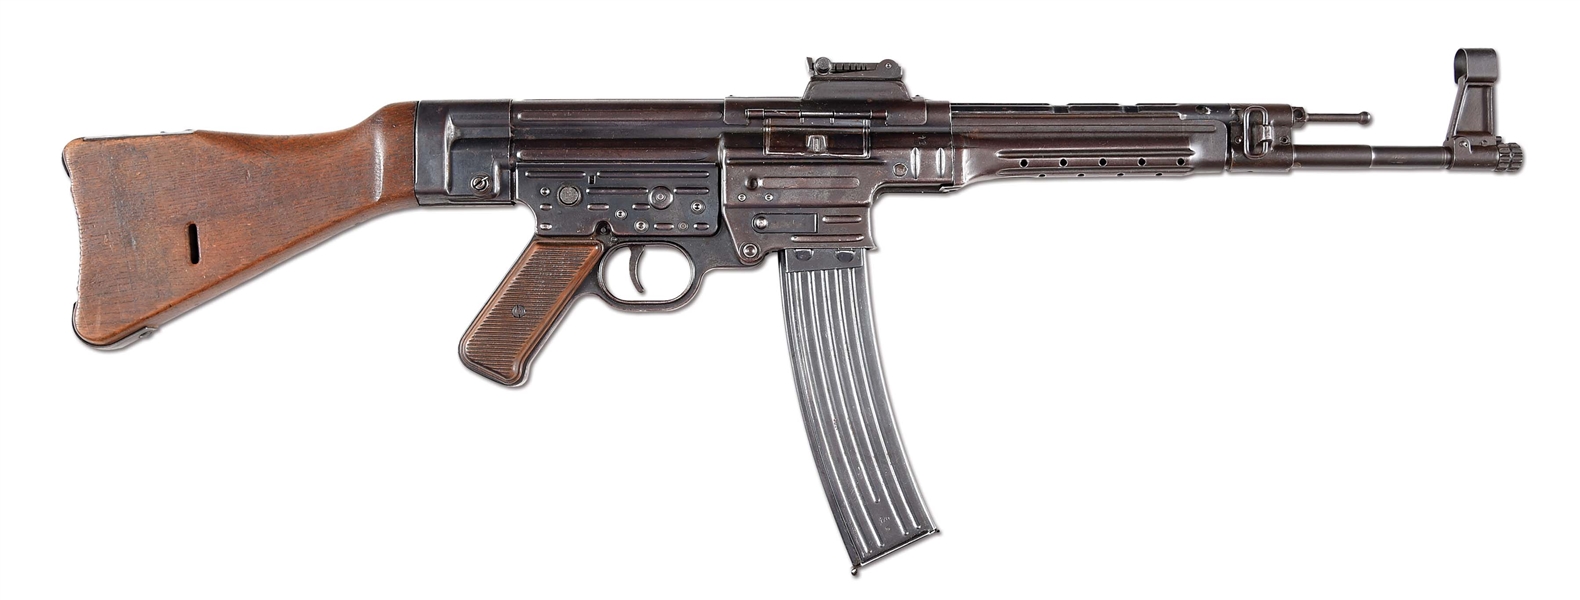 (N) HIGHLY DESIRABLE GERMAN MP-43 MACHINE GUN WITH ORIGINAL VINTAGE AMMUNITION (CURIO & RELIC).